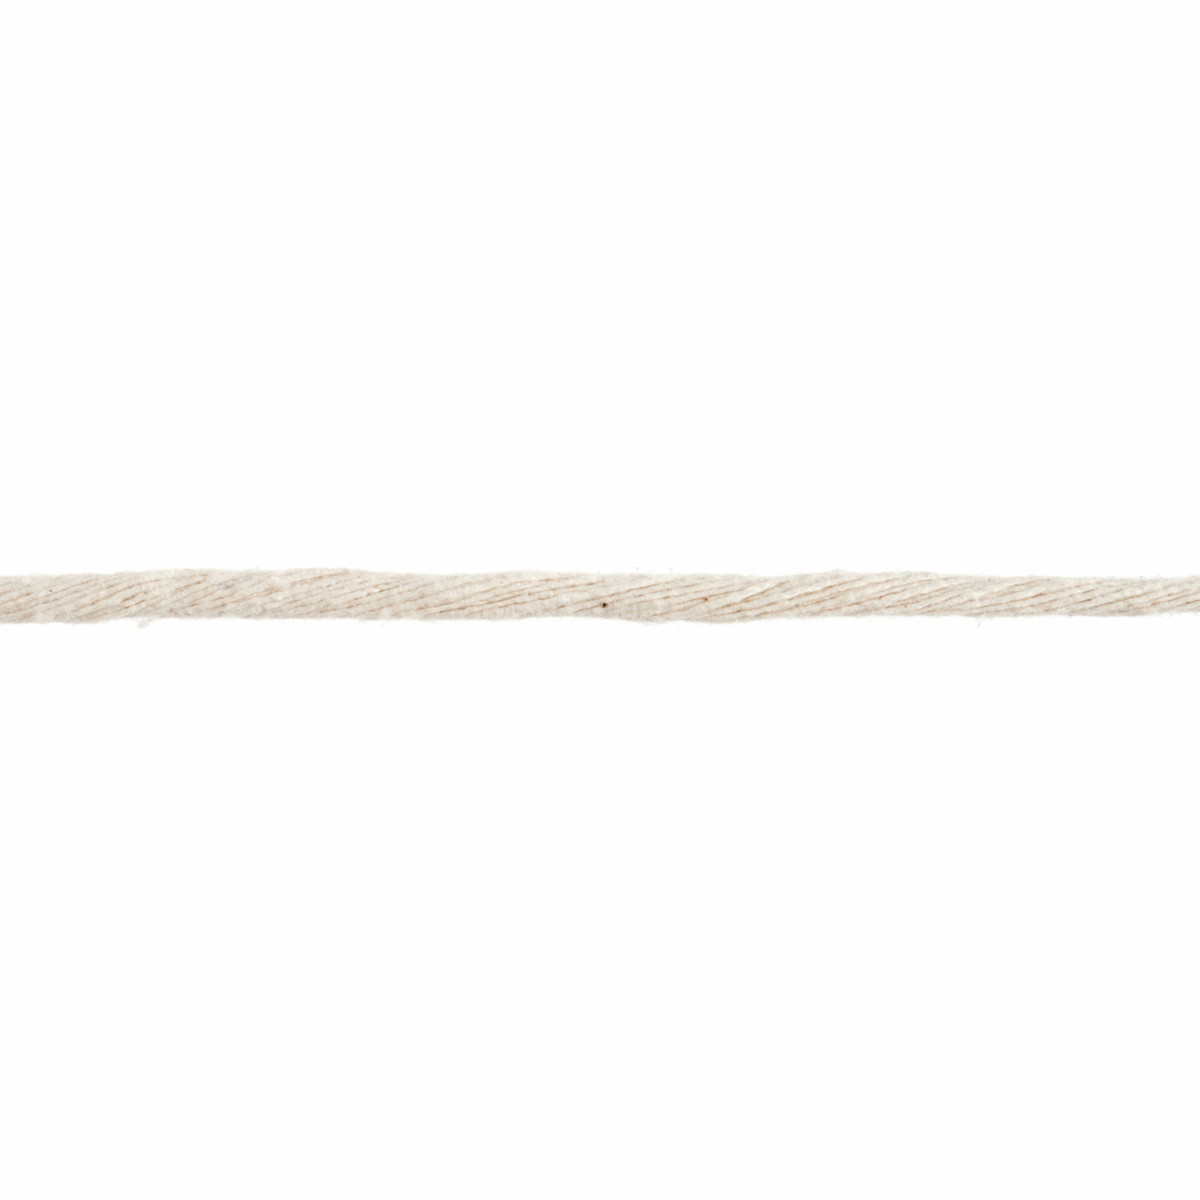 Cotton Macramé Cord: 50m x 4mm: Natural